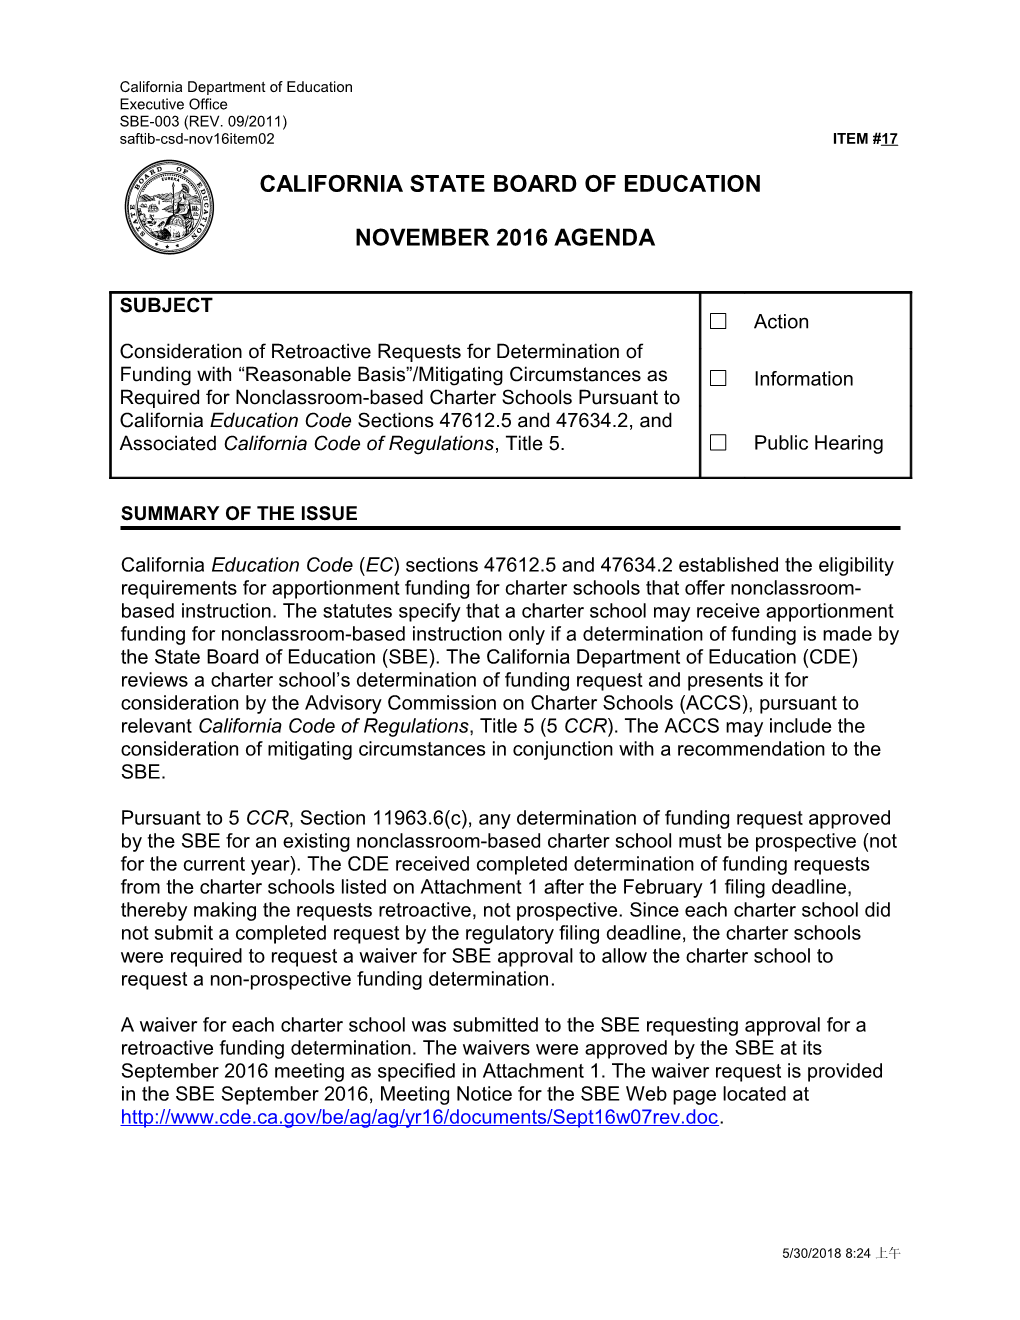 November 2016 Agenda Item 17 - Meeting Agendas (CA State Board of Education)